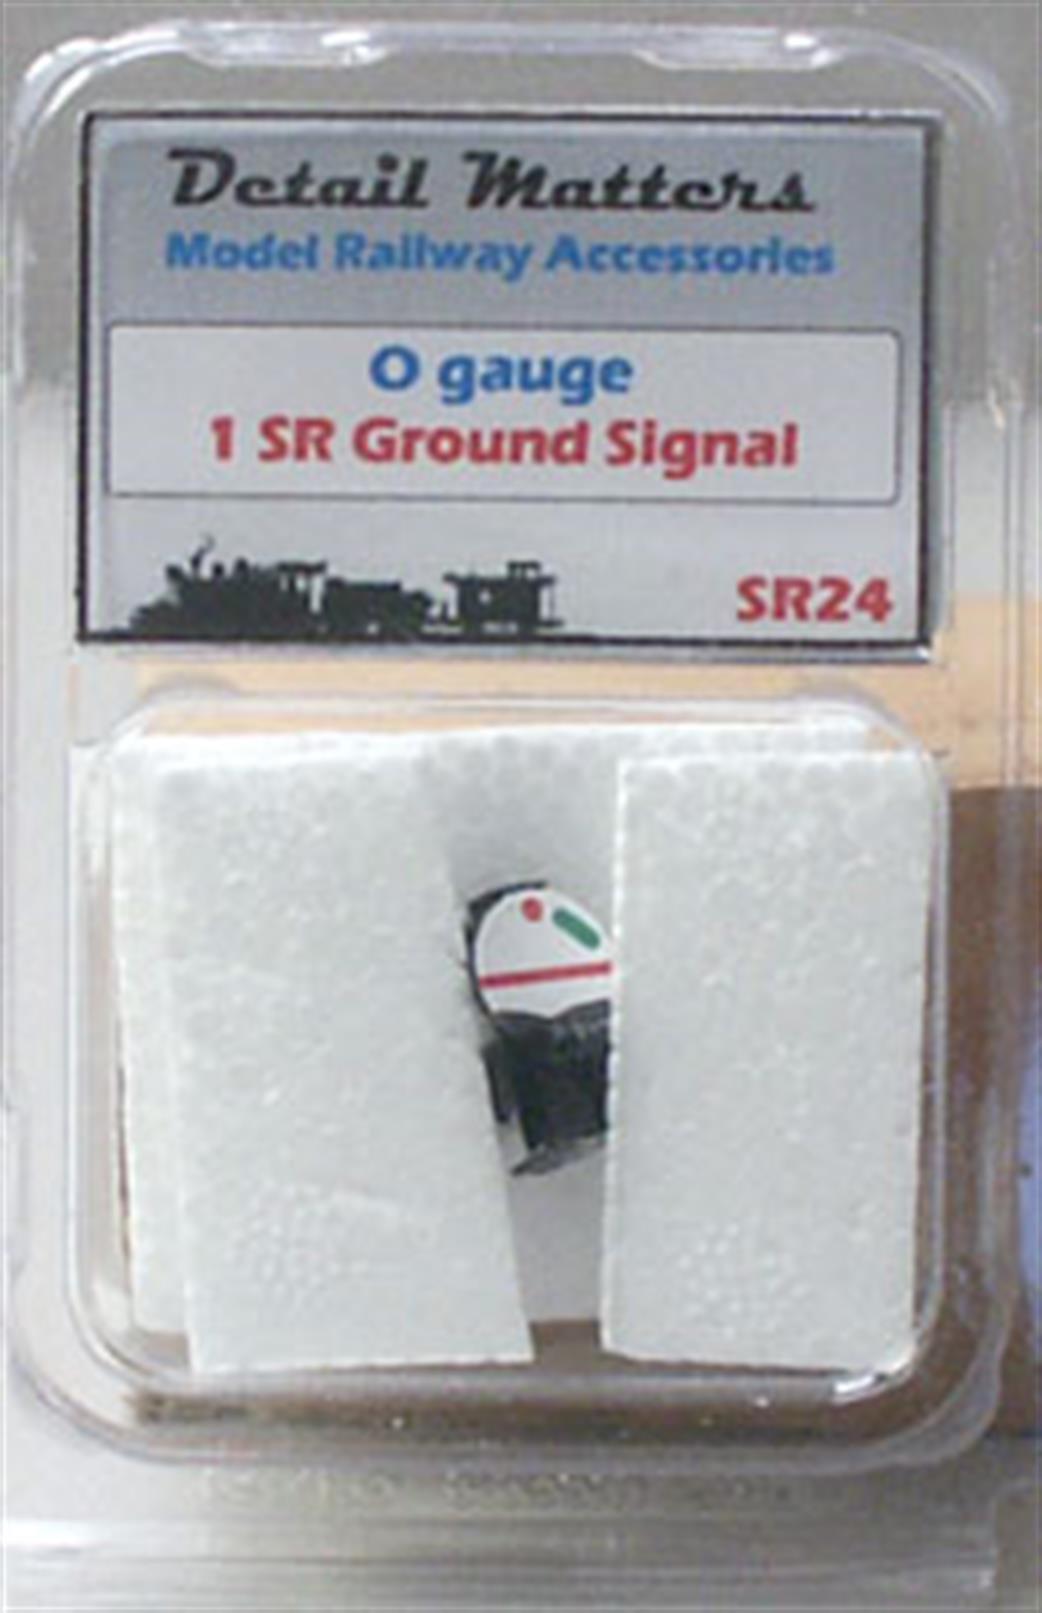 Detail Matters O Gauge SR24 SR Ground Signal